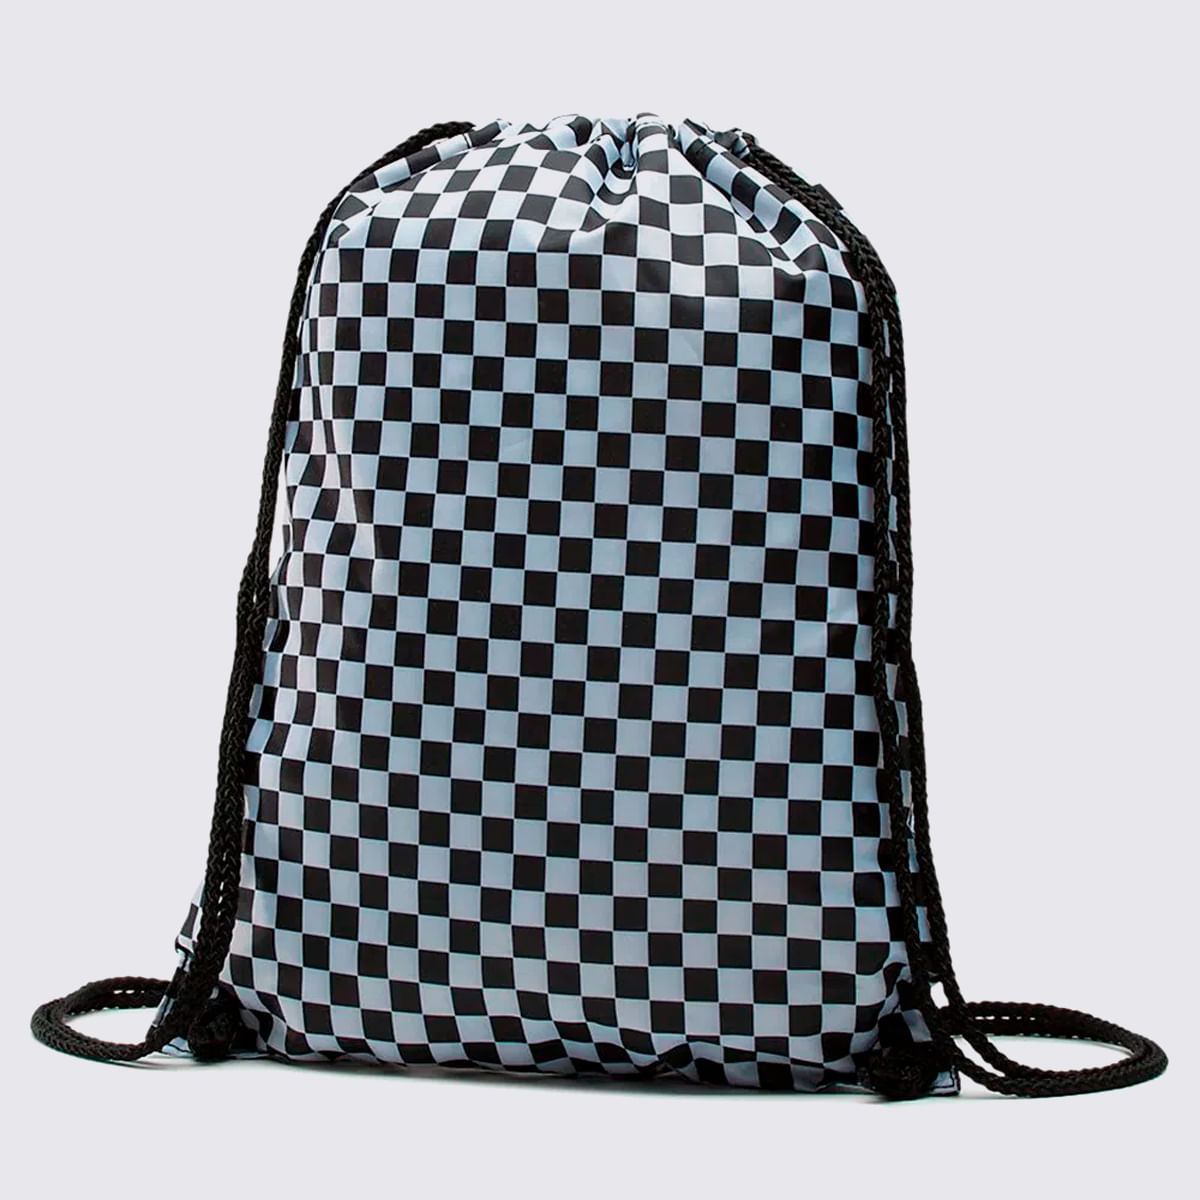 Mochila Vans Wm Benched Bag Black White Checkerboard VN000SUF56M - Menina  Shoes